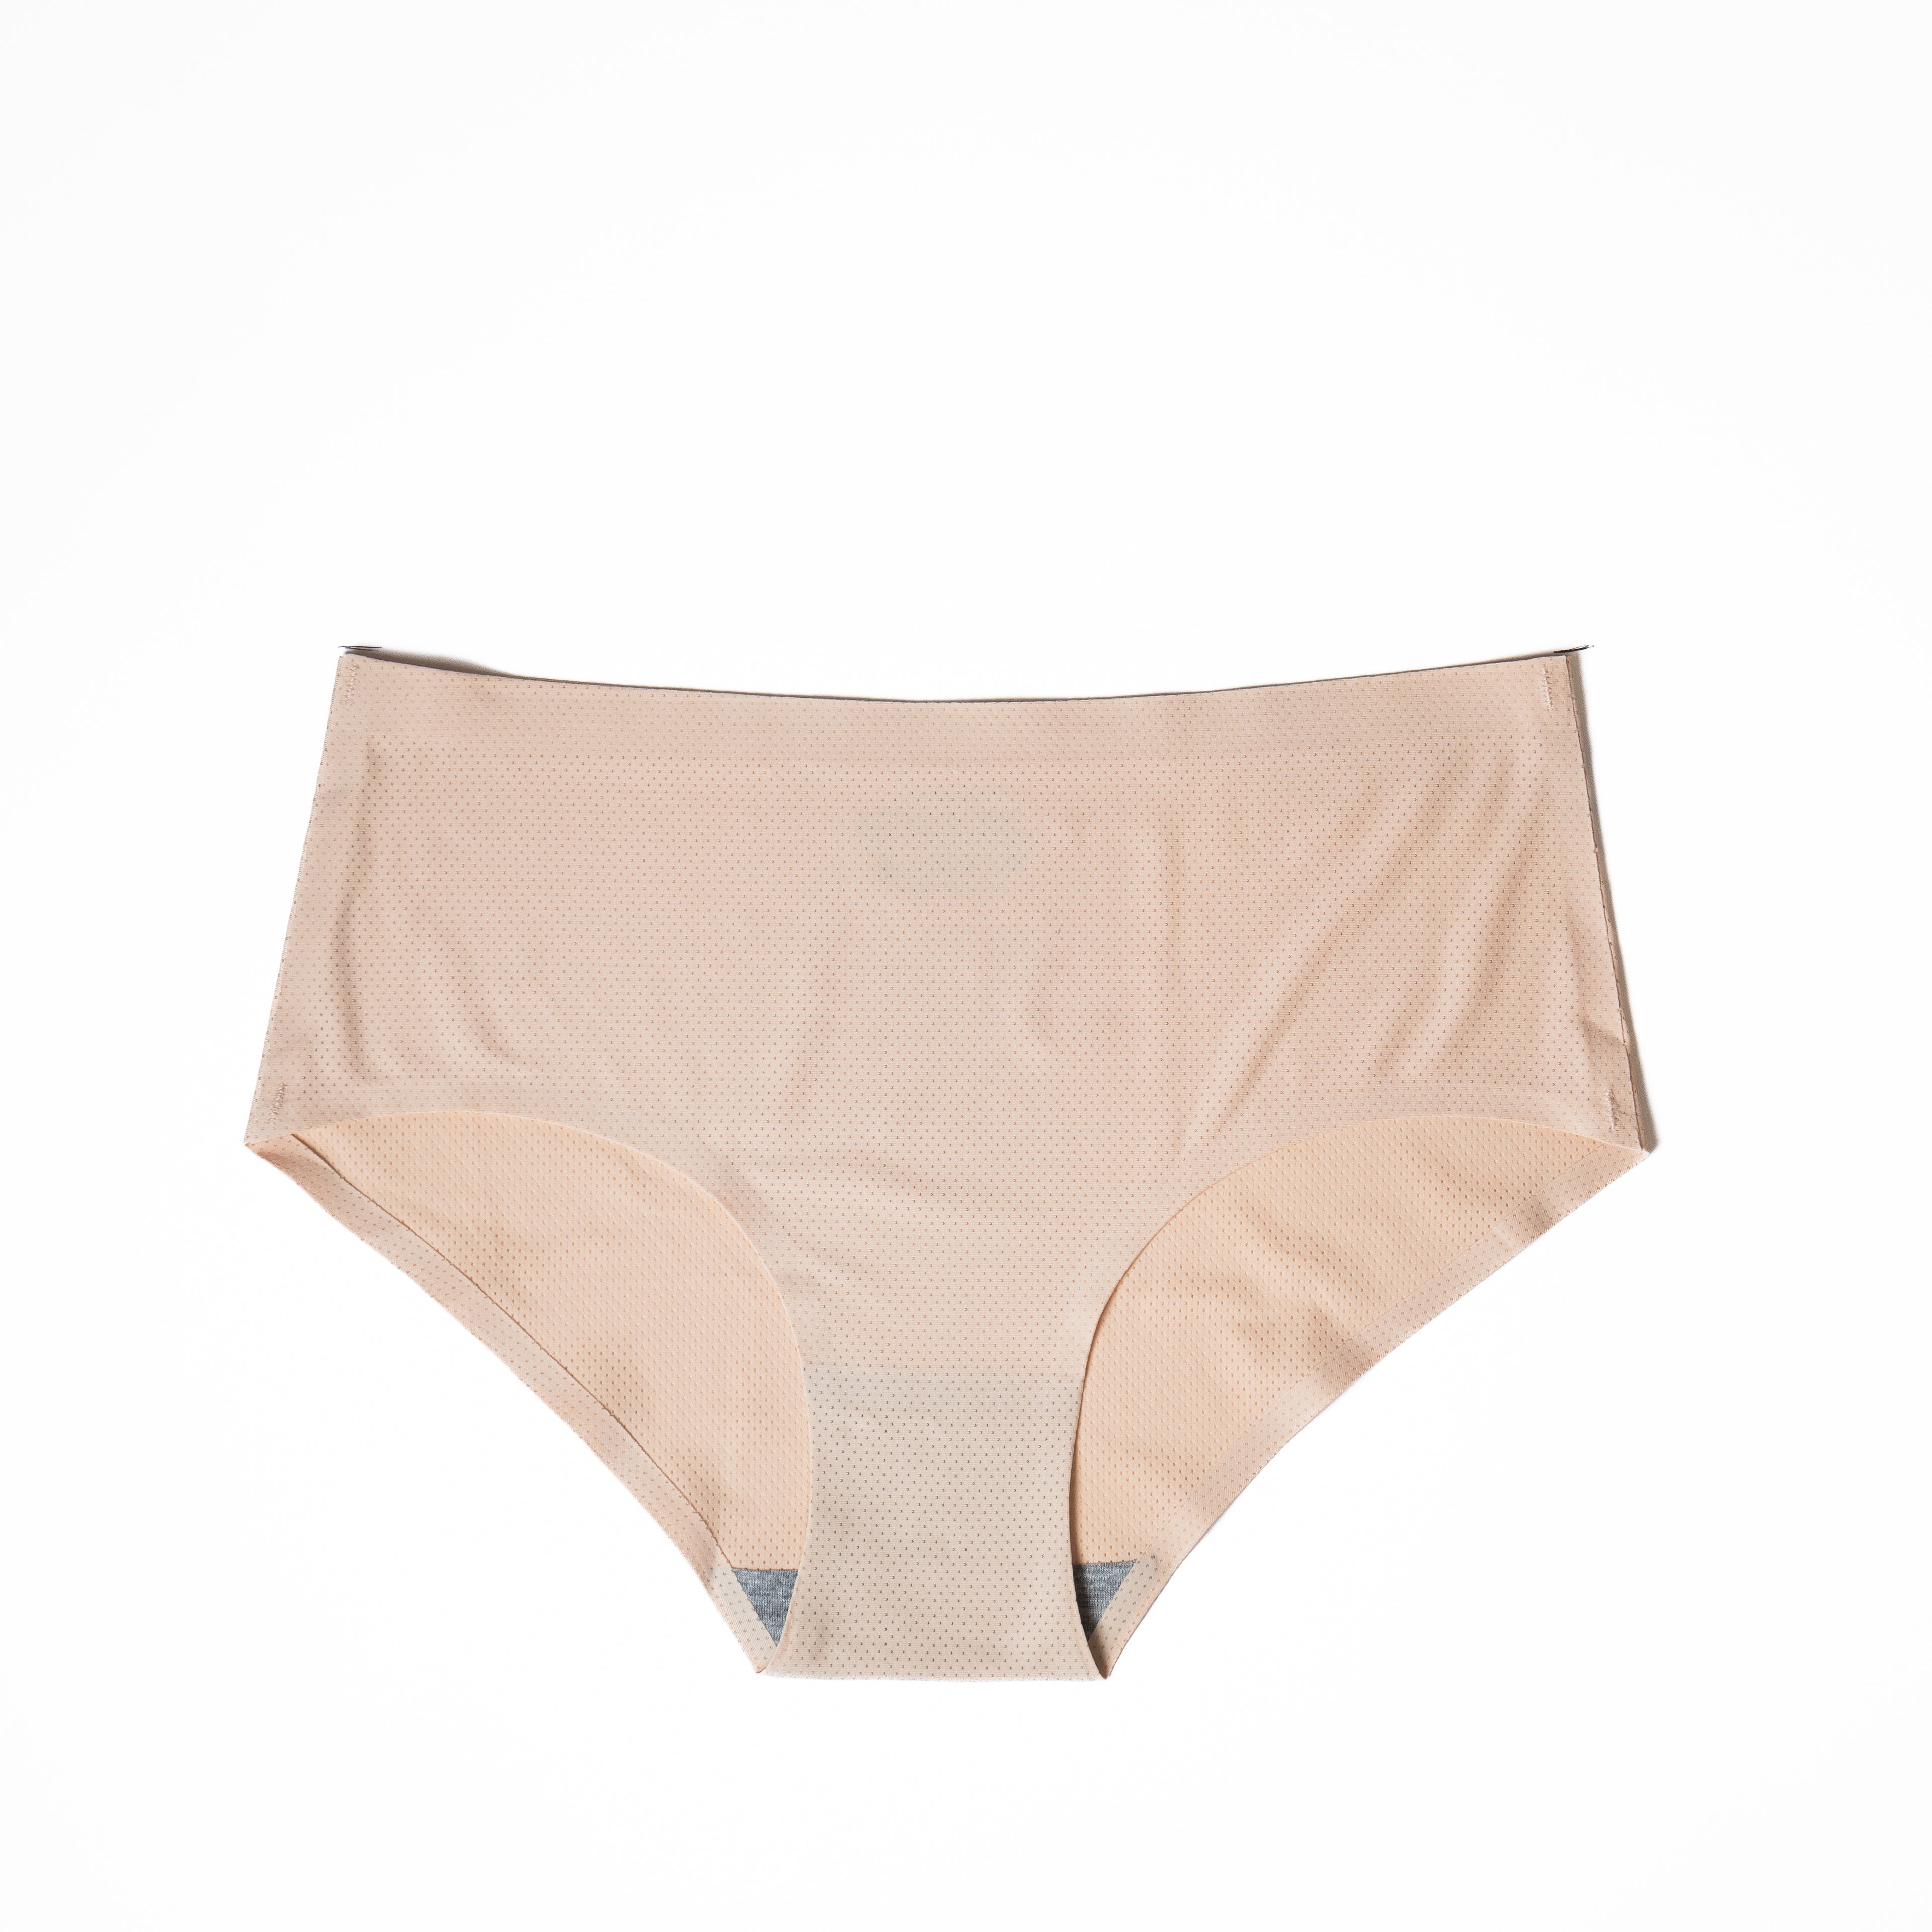 Buy LAK 18 Women's Nylon Seamless Panties High Waist Brief Fit